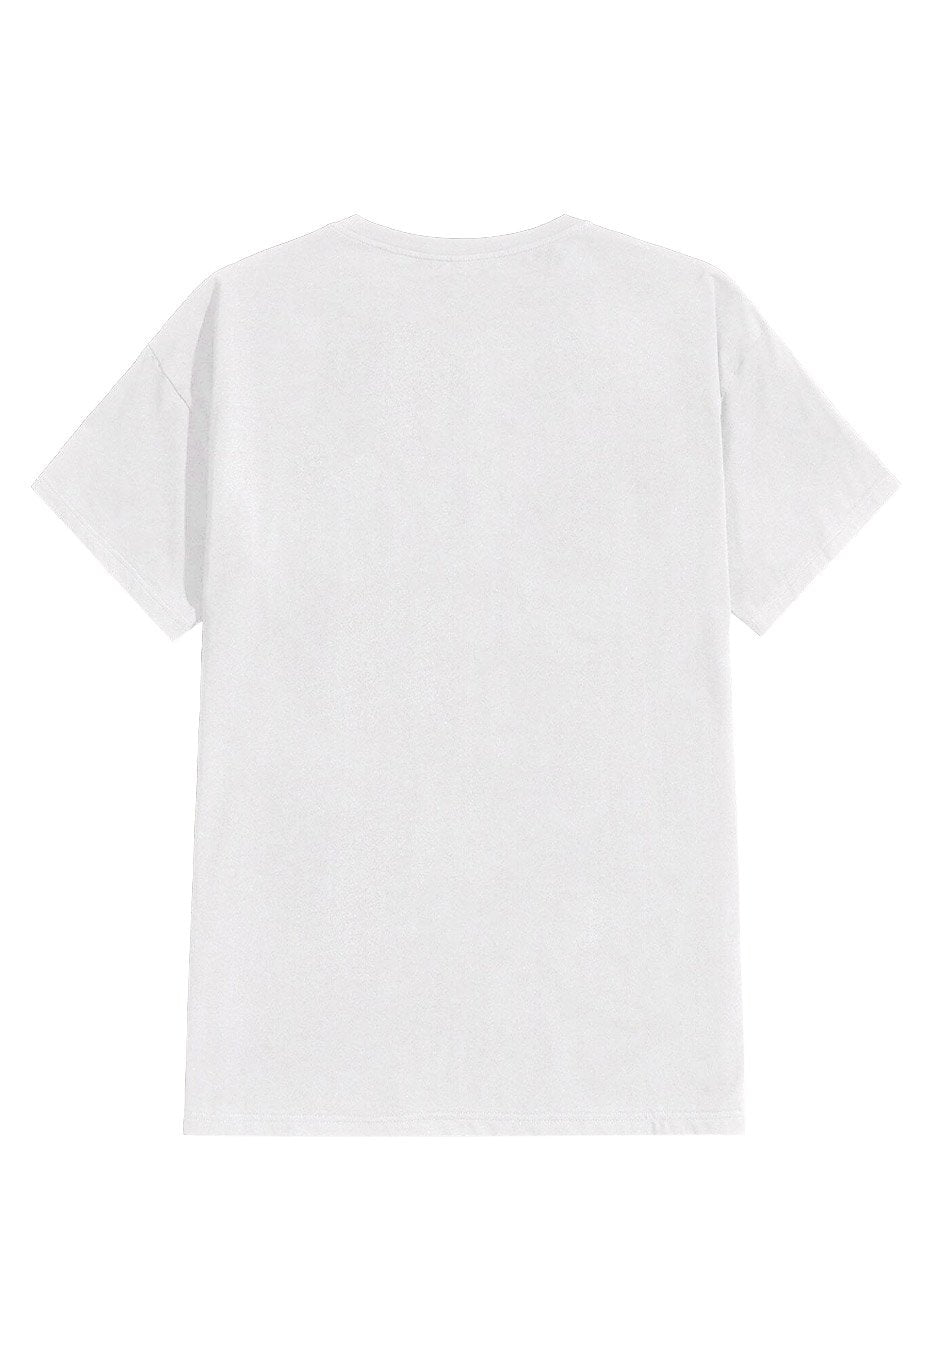 Chelsea Grin - Simple Logo White - T-Shirt | Neutral-Image